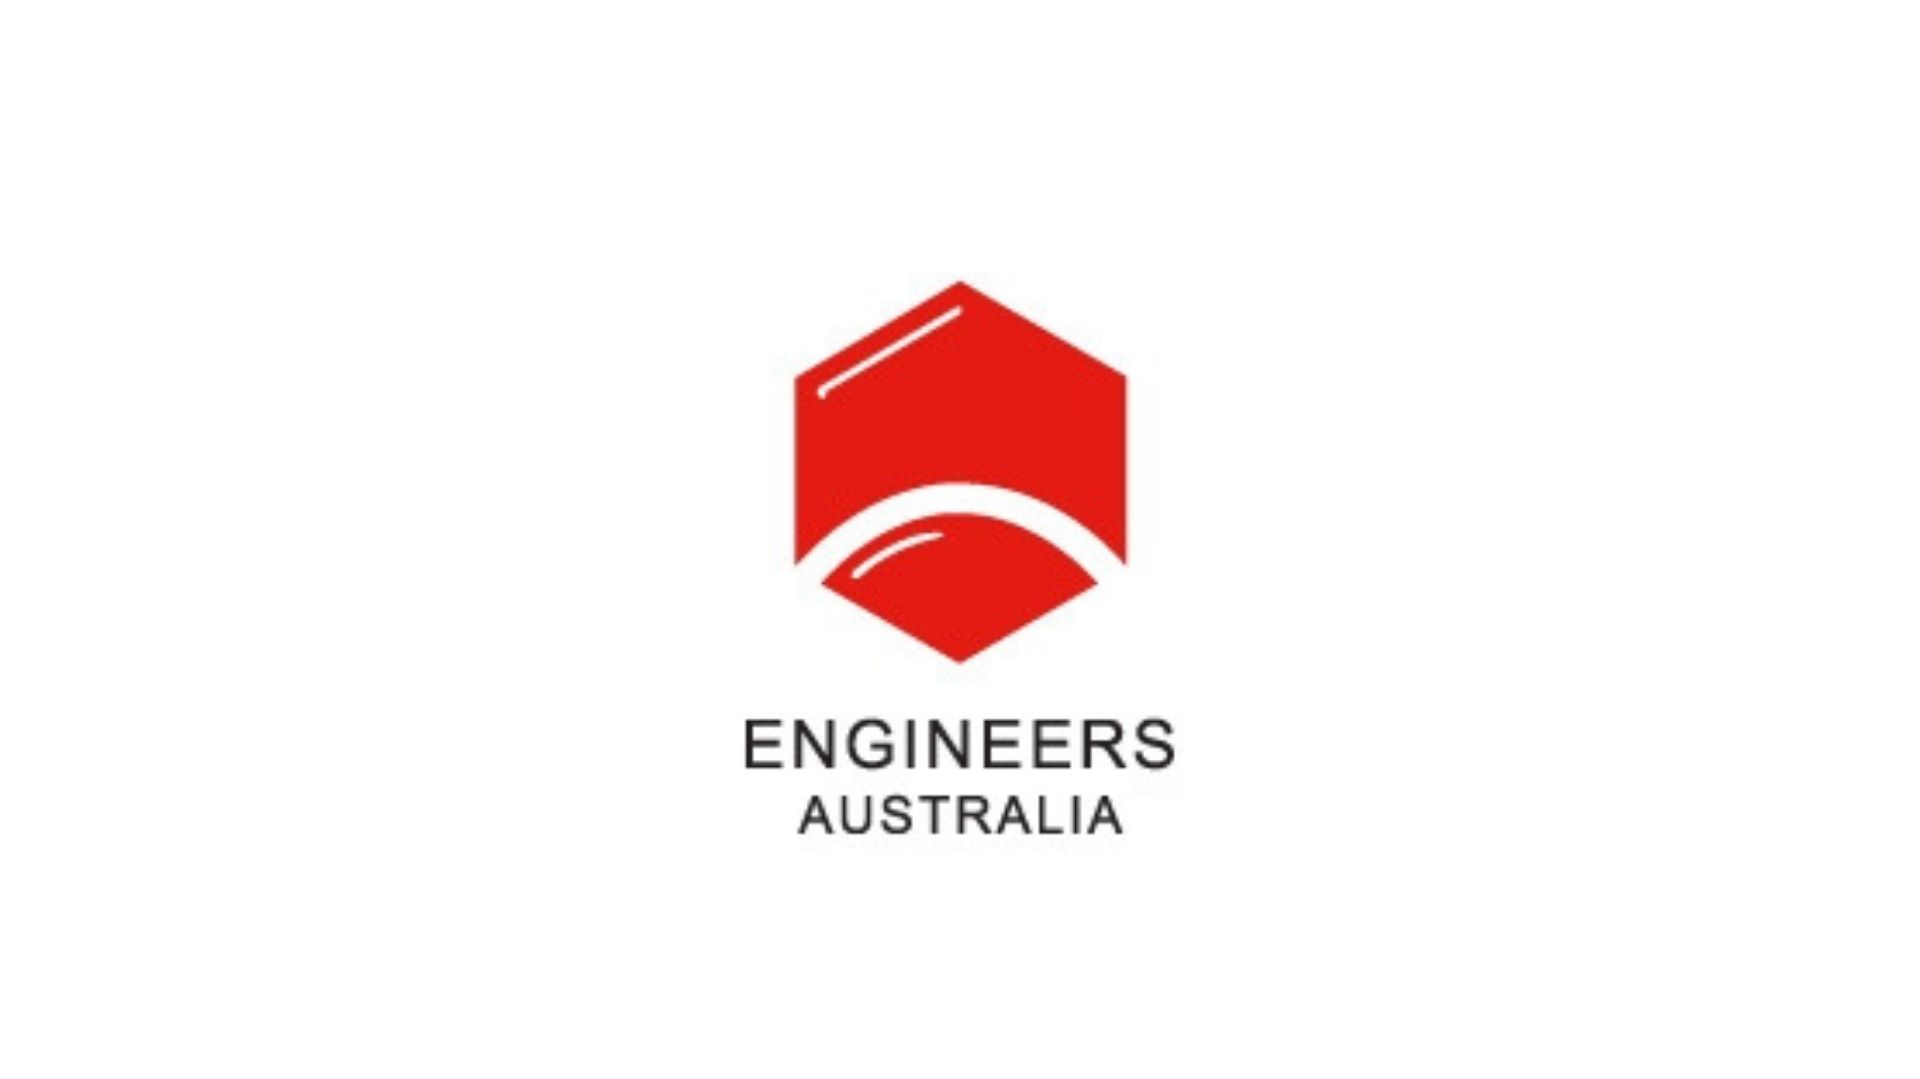 Accreditation by Engineers Australia